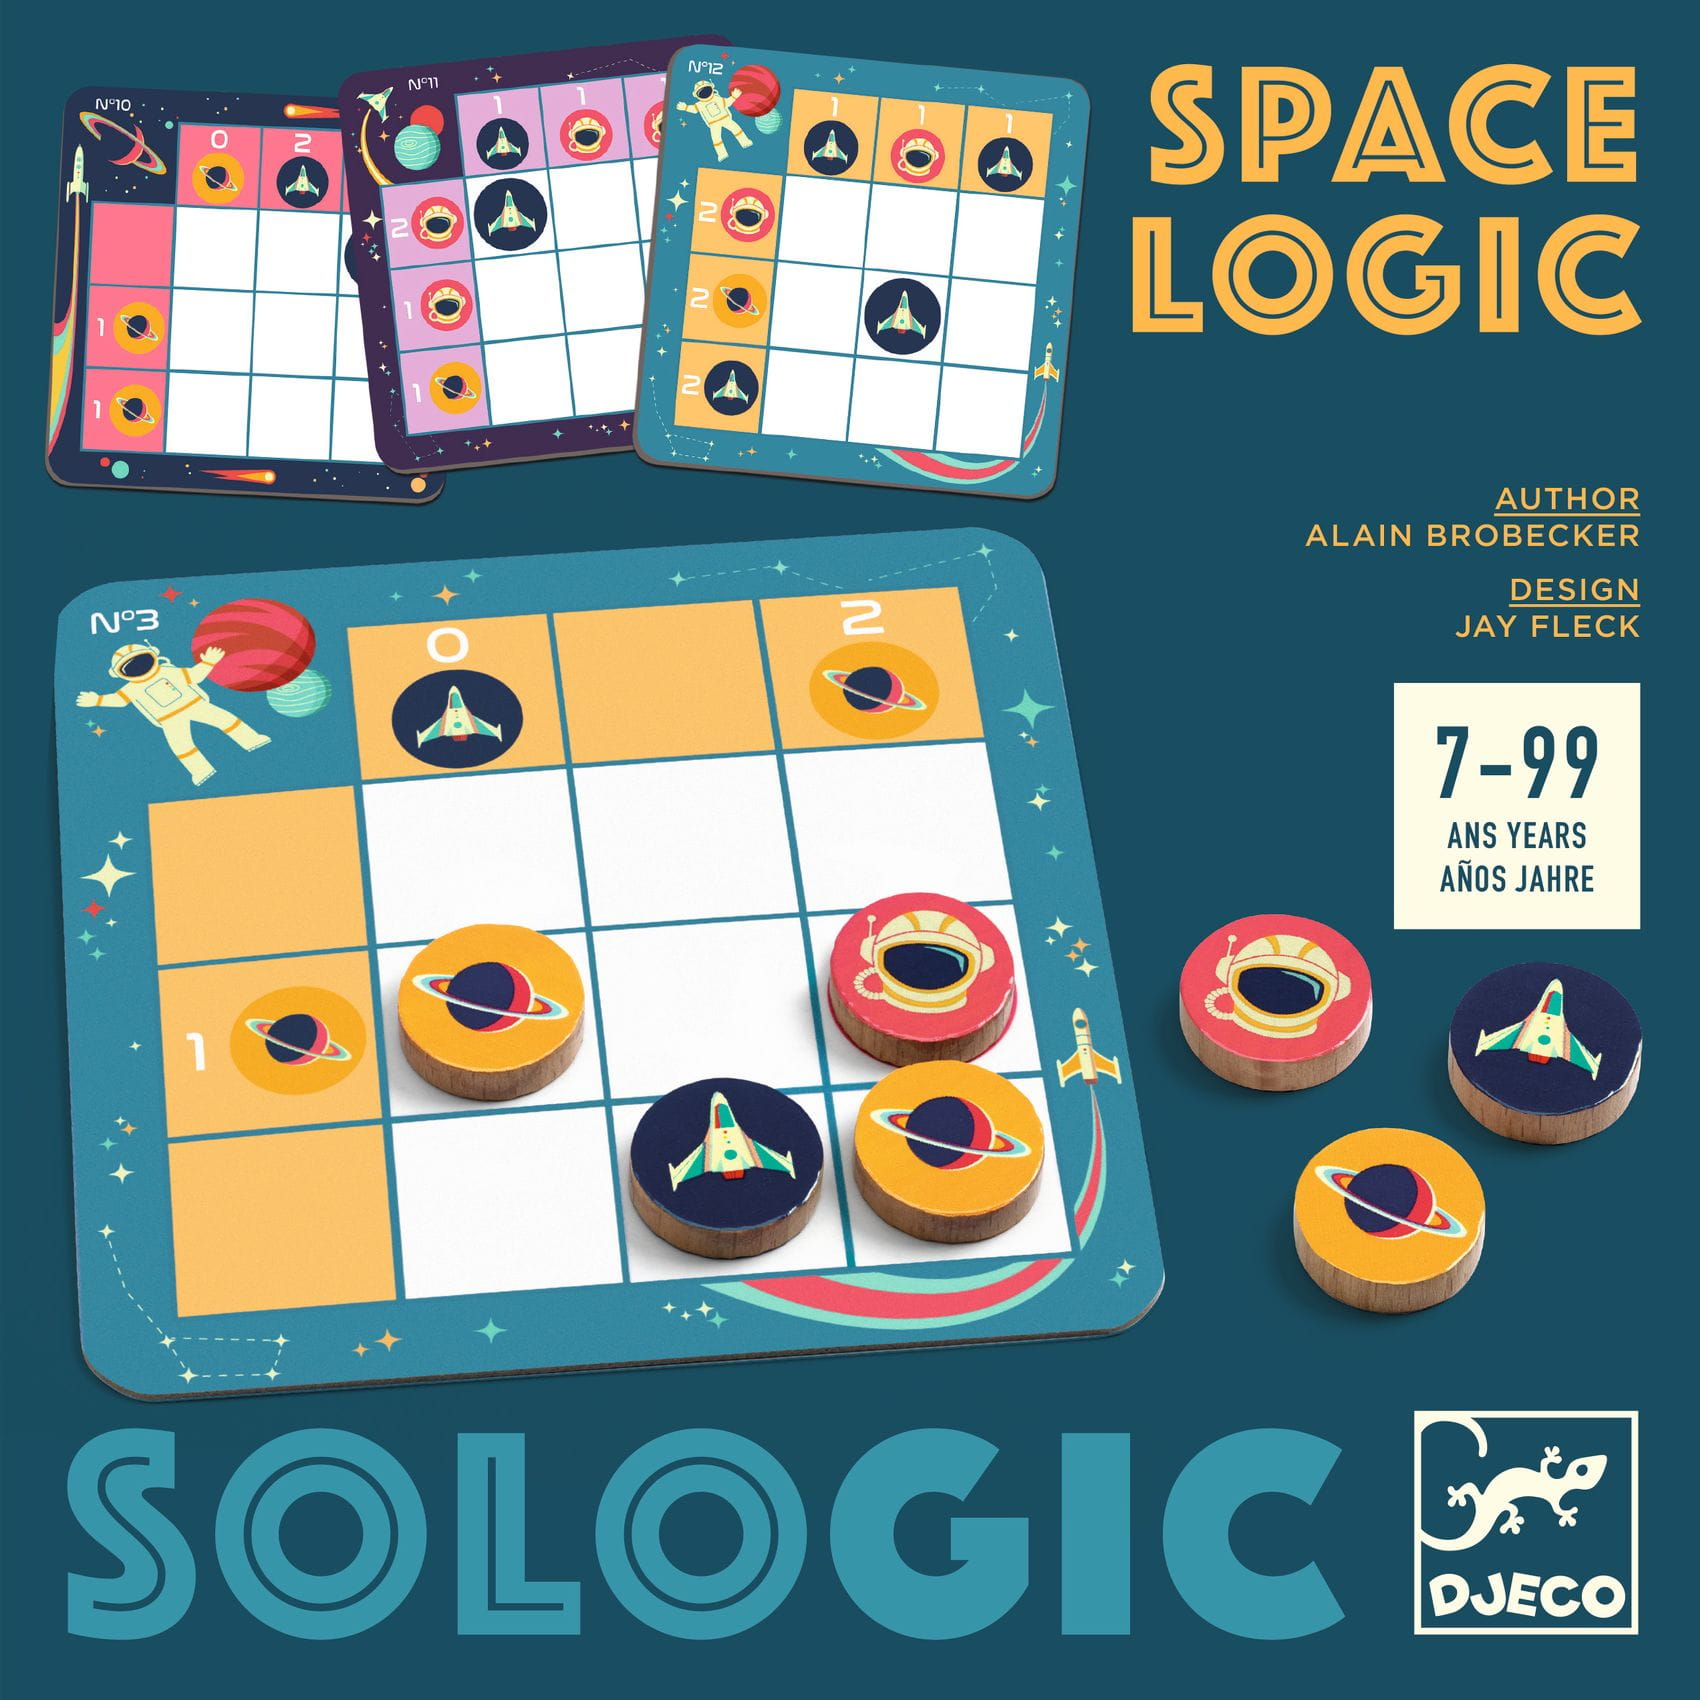 Space Logic gra logiczna układanka Sologic |Djeco